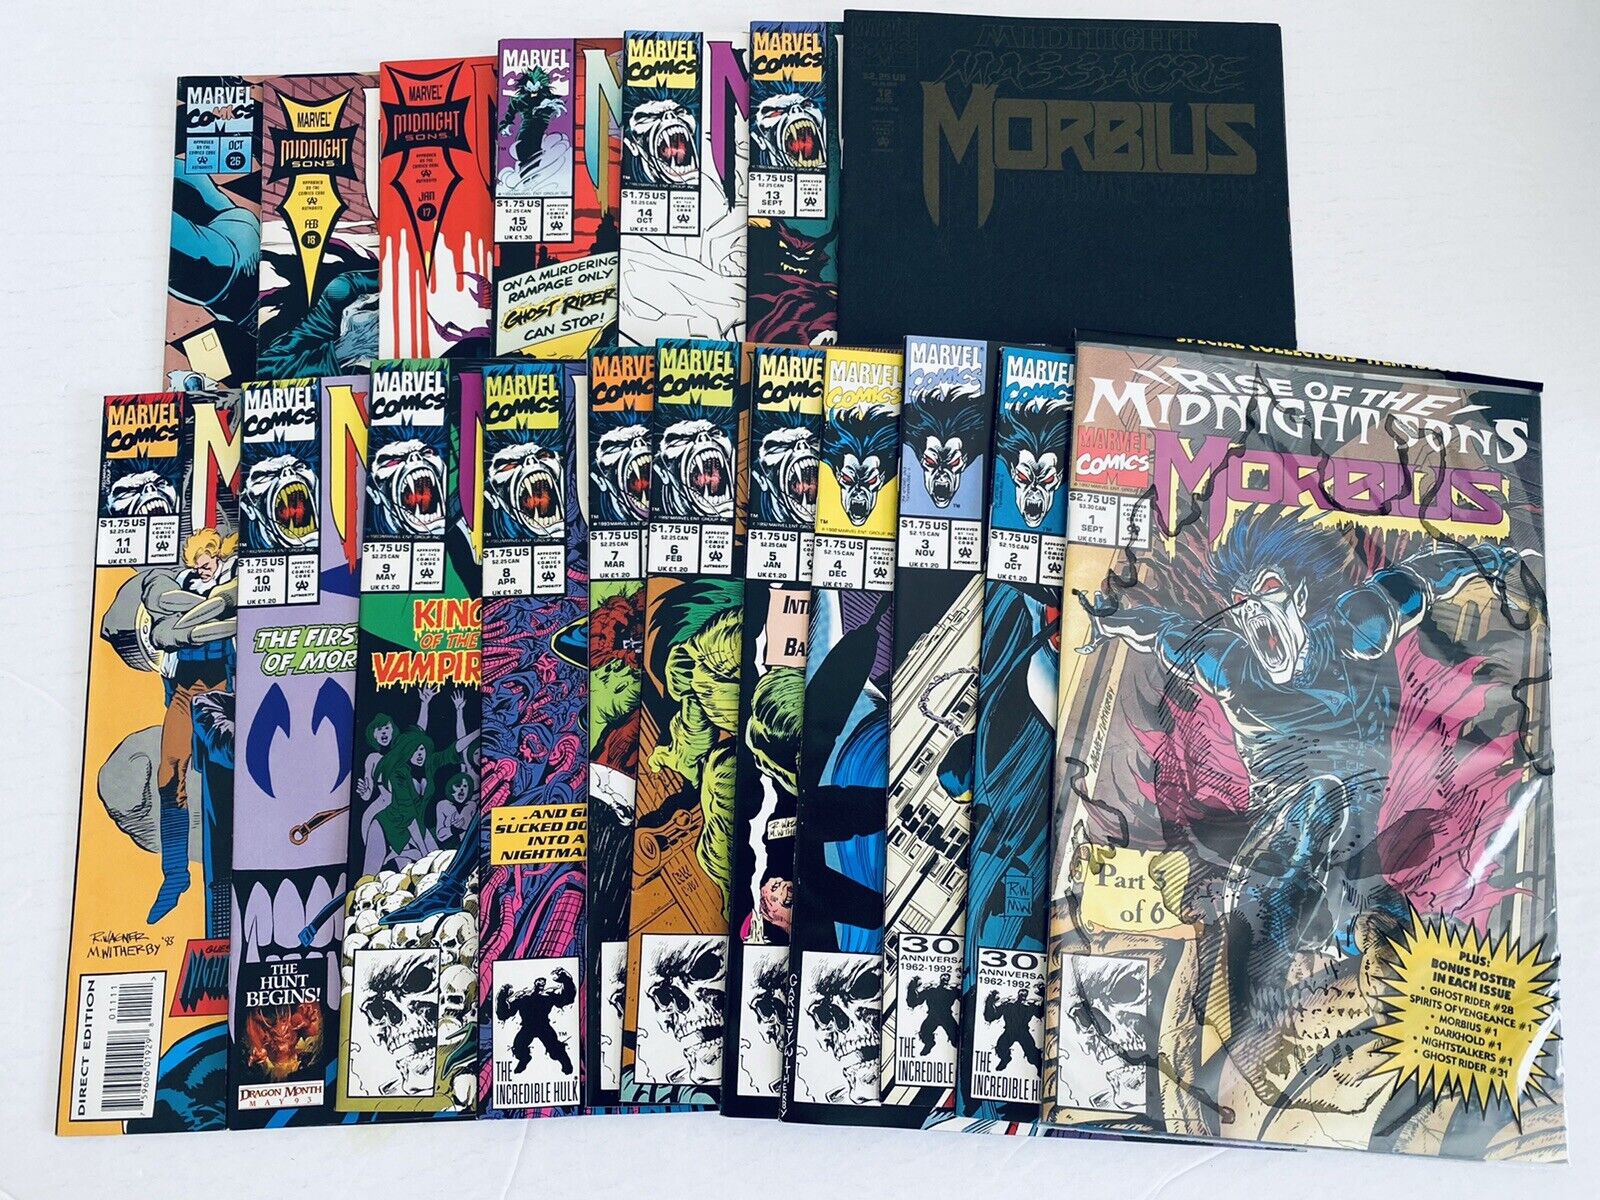 Morbius: The Living Vampire #1 2 3 4 5 6 7 8 9-15 17 18 26 (1992) Marvel lot NM